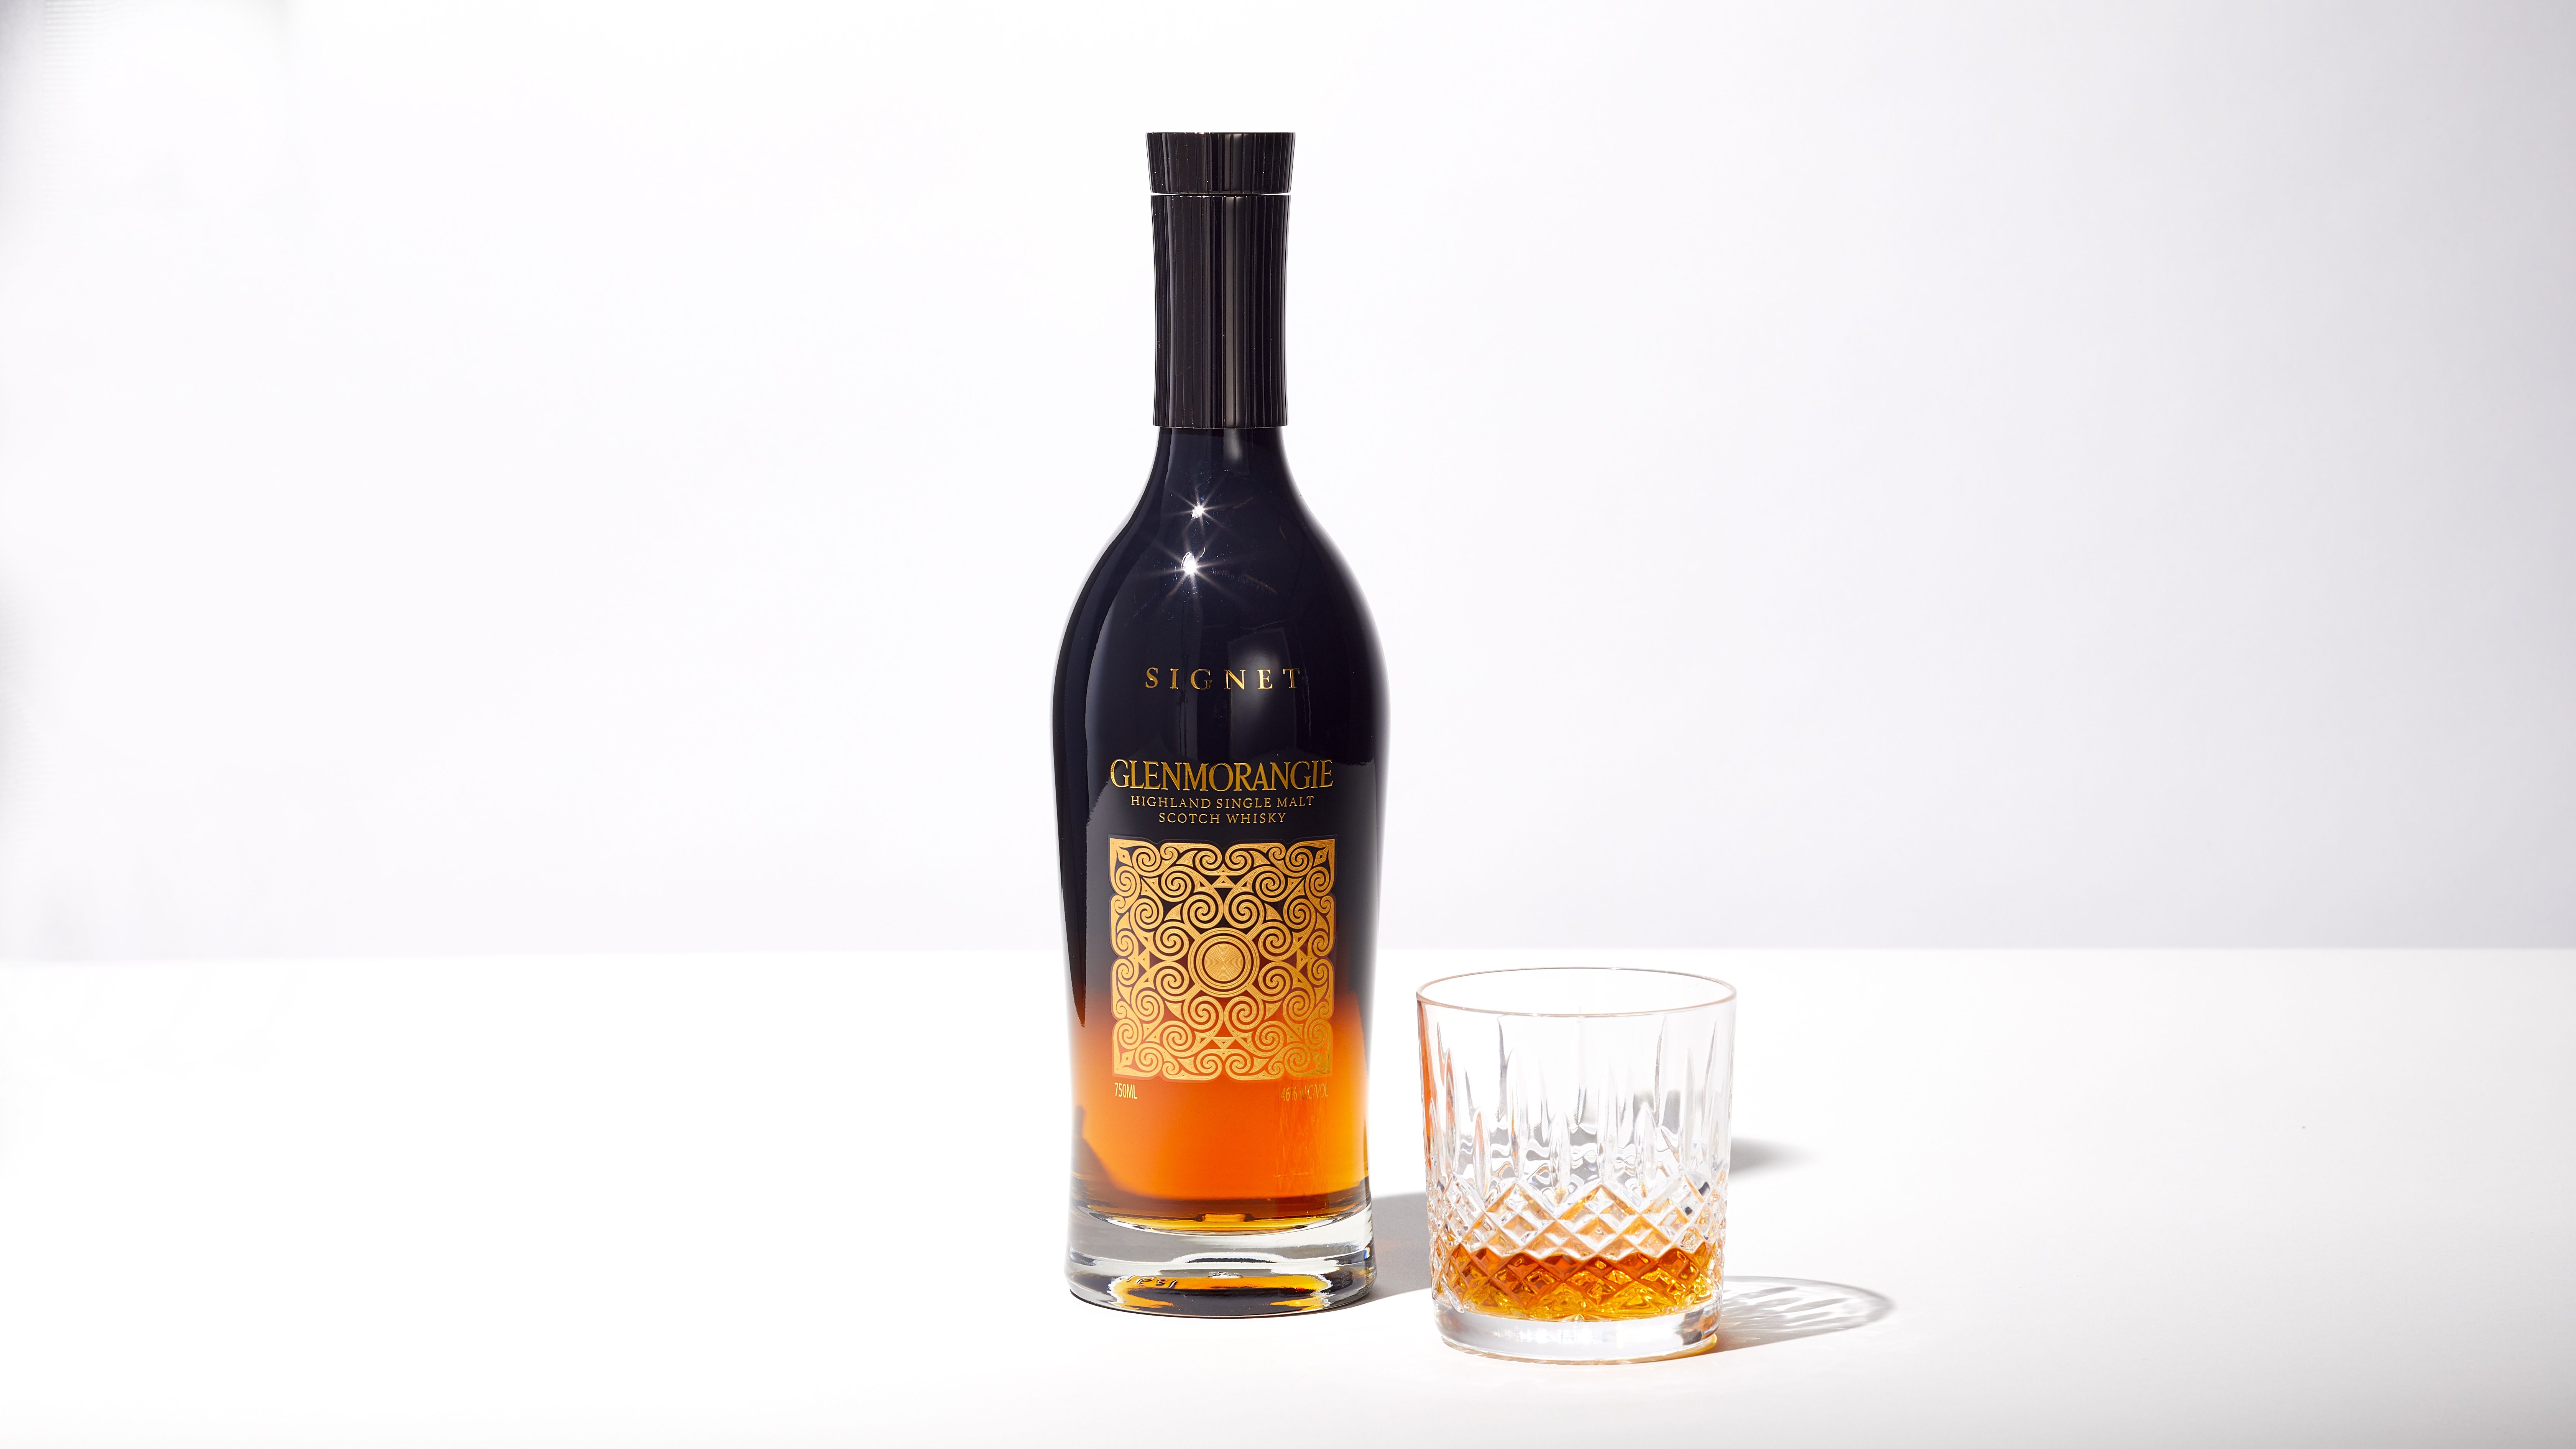 Glenmorangie's Signet Is the Single Malt Scotch Whisky to Gift